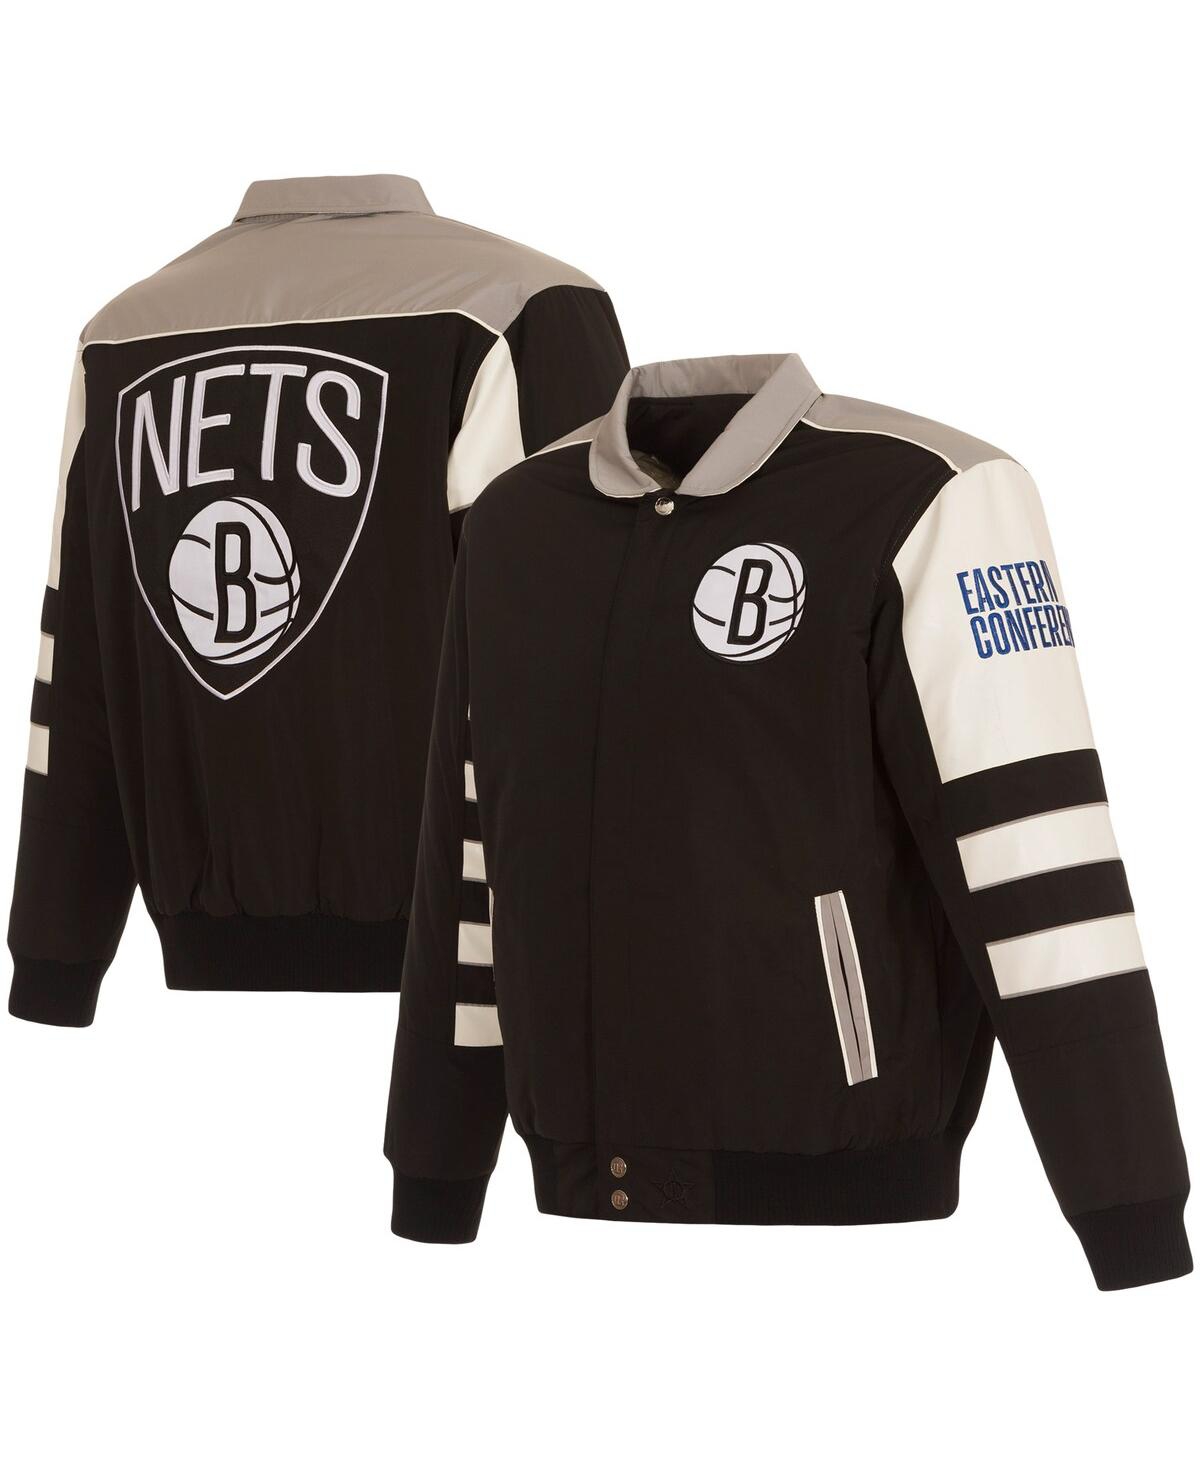 Men's Jh Design Black Brooklyn Nets Stripe Colorblock Nylon Reversible Full-Snap Jacket - Black